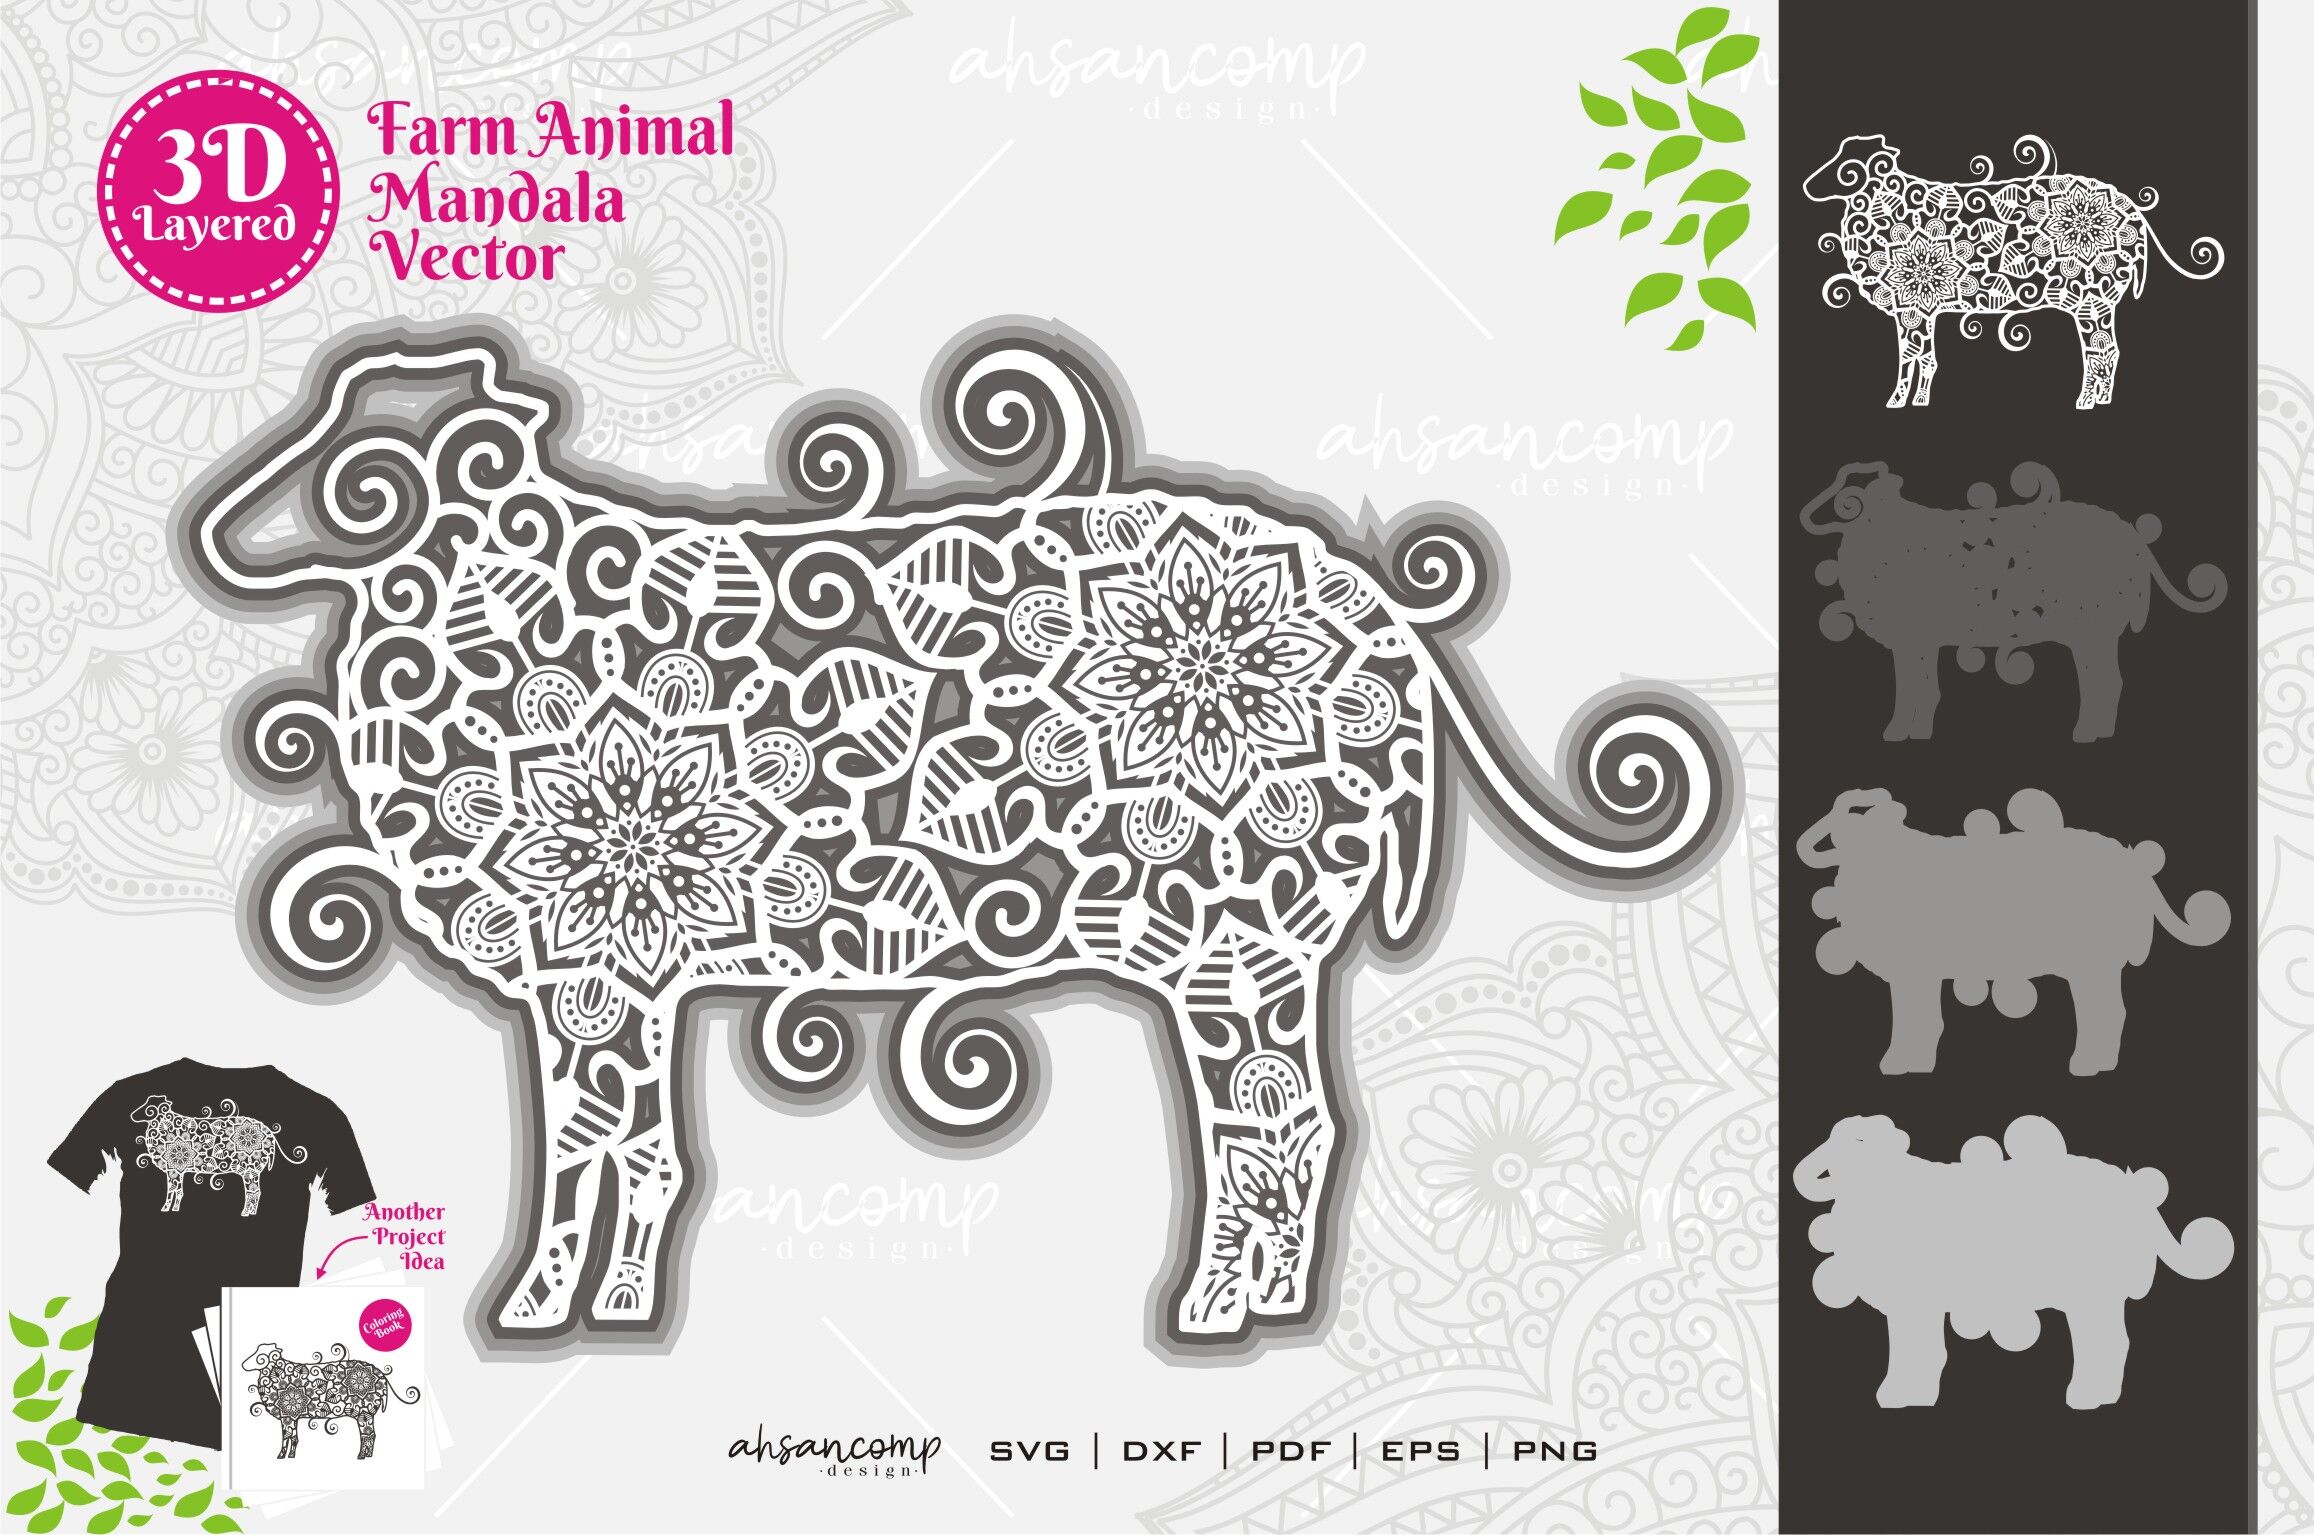 Farm Animal Mandala Svg 3d Layered 8 By Ahsancomp Studio Thehungryjpeg Com